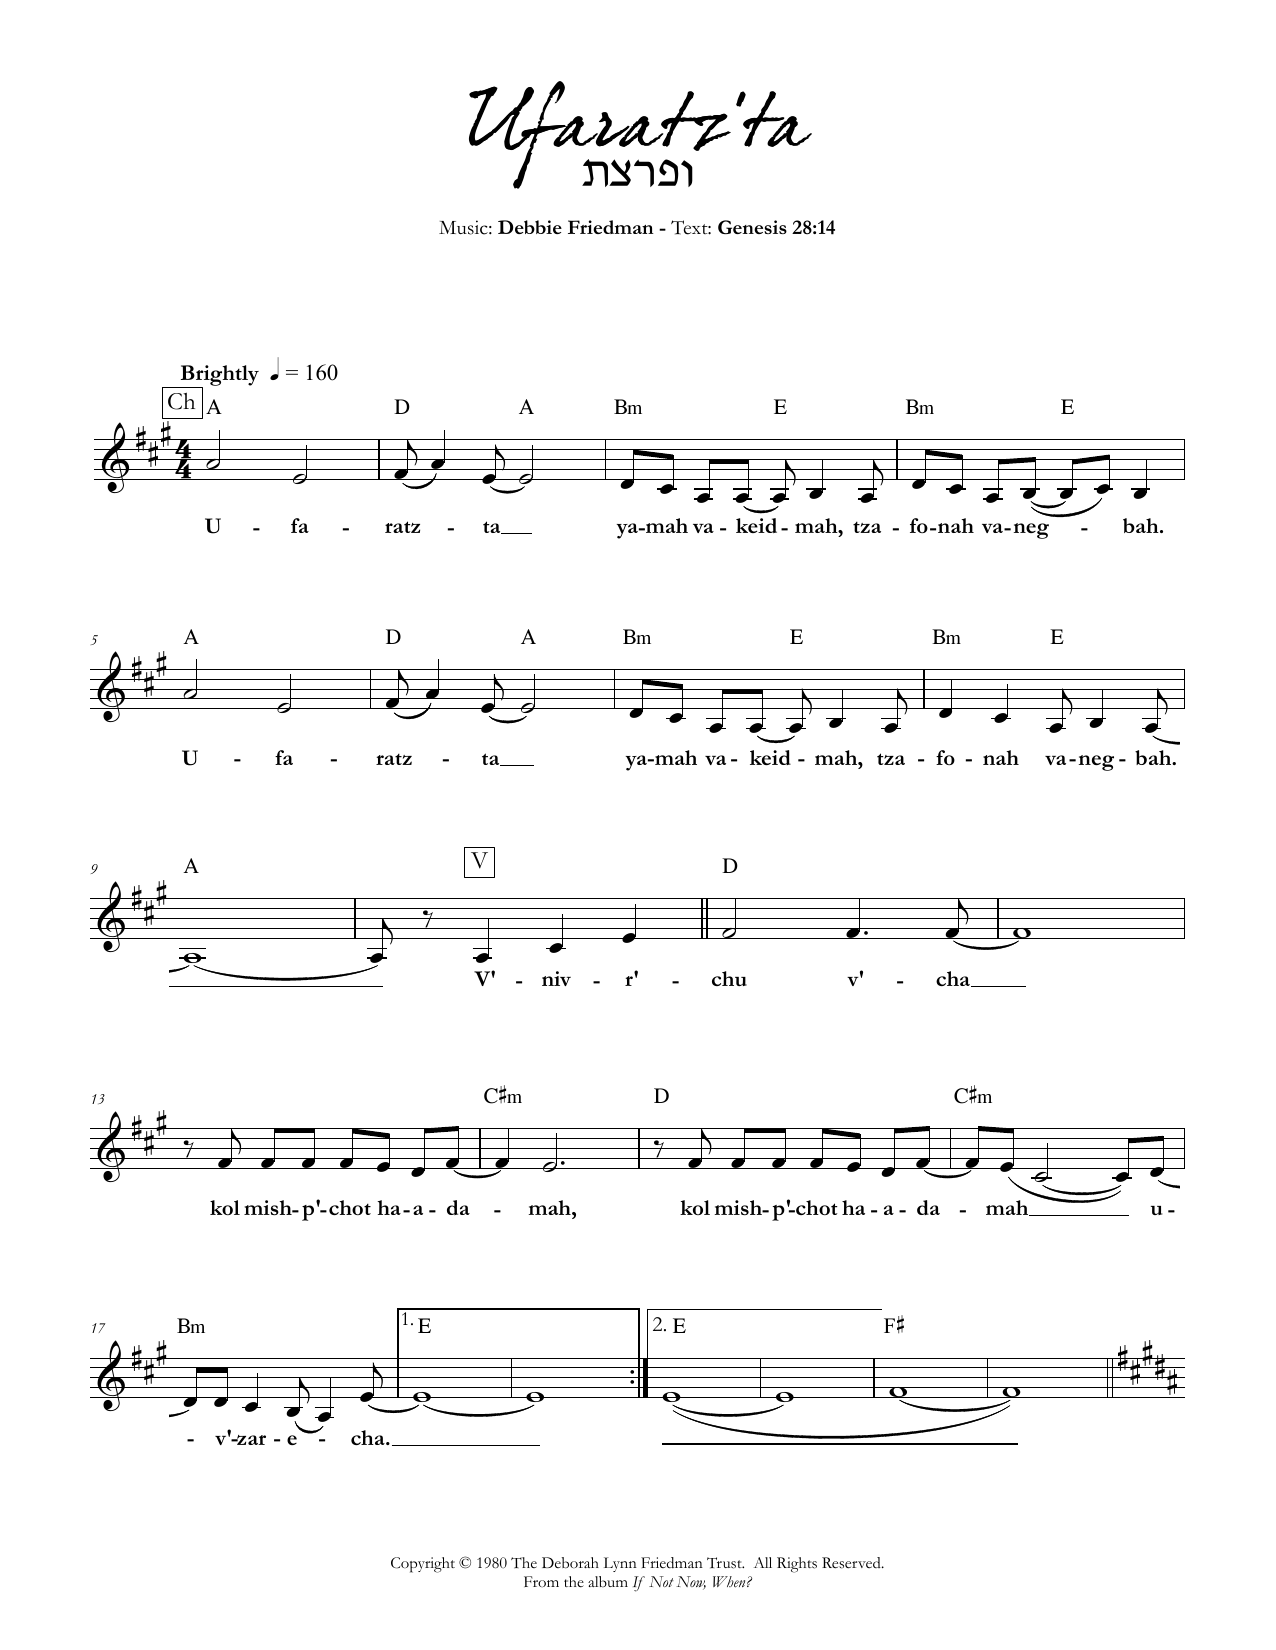 Download Debbie Friedman Ufaratz'ta Sheet Music and learn how to play Lead Sheet / Fake Book PDF digital score in minutes